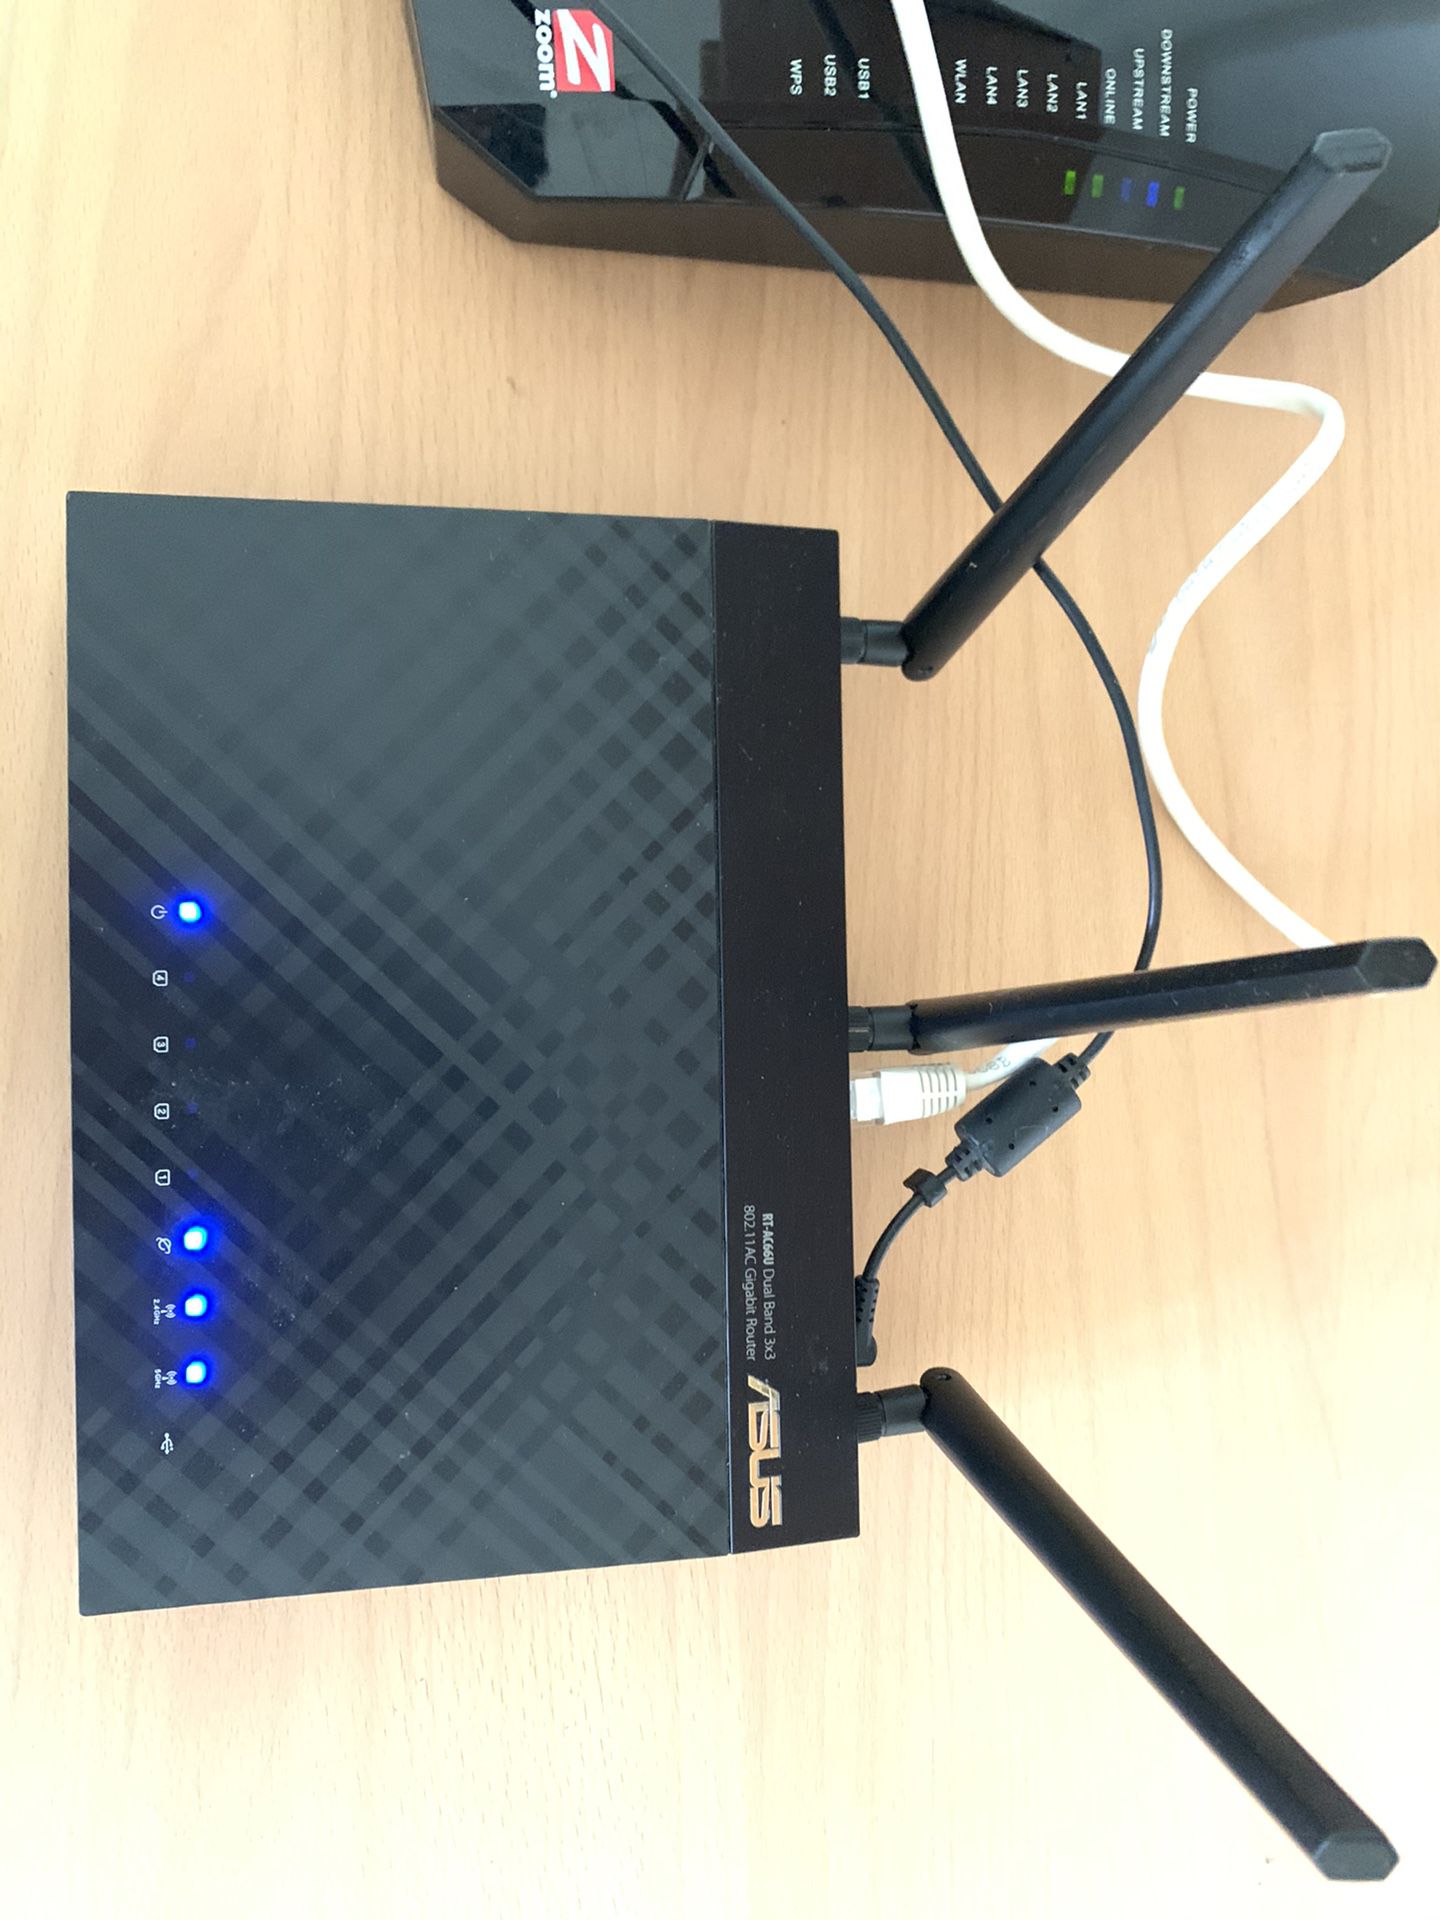 ASUS RT-AC66U B1 AC1750 Dual-Band WiFi Router